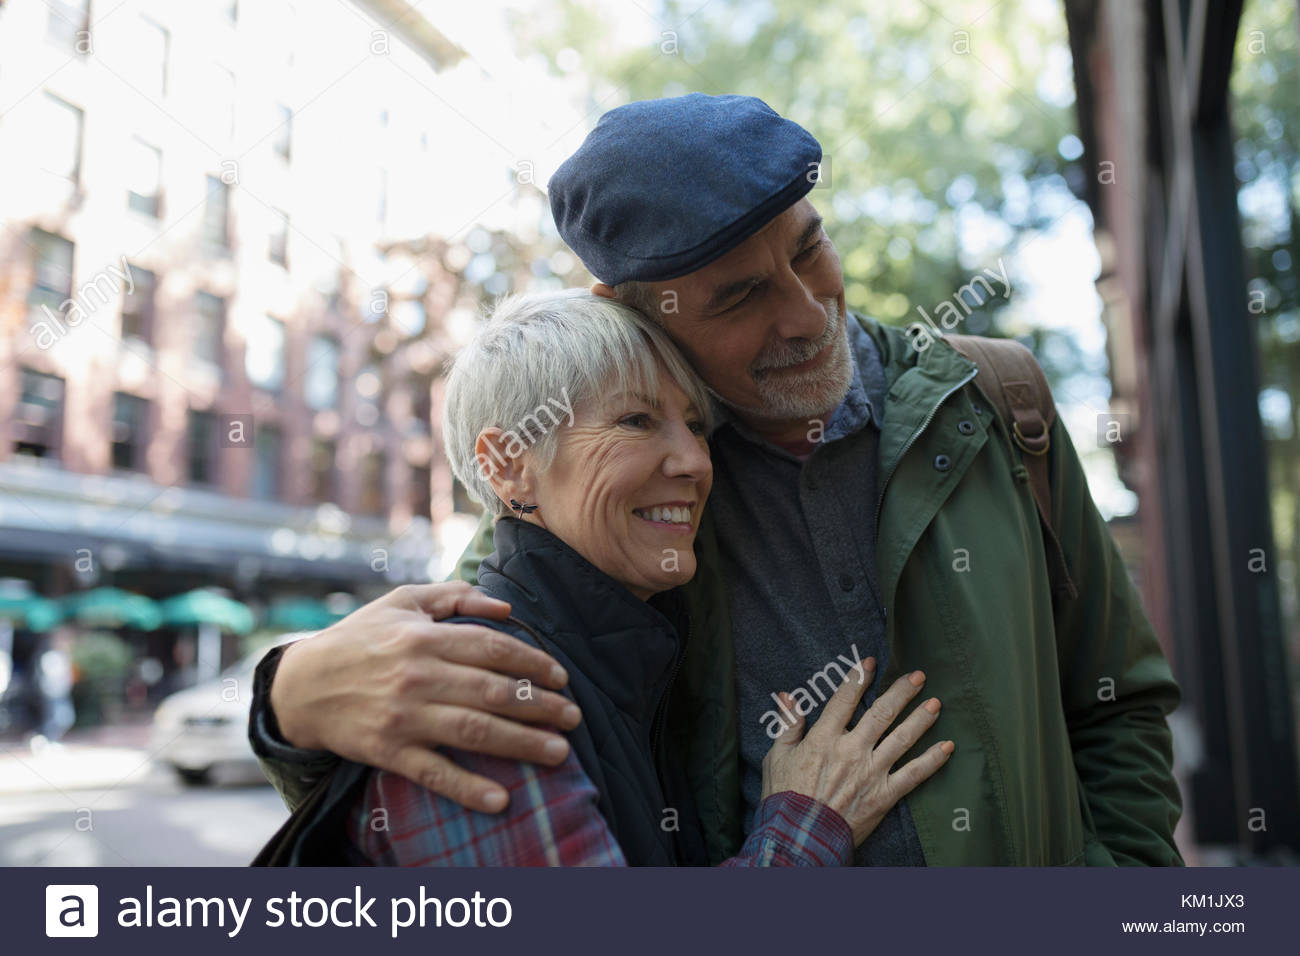 Senior couple window shopping at urban storefront Stock Photo